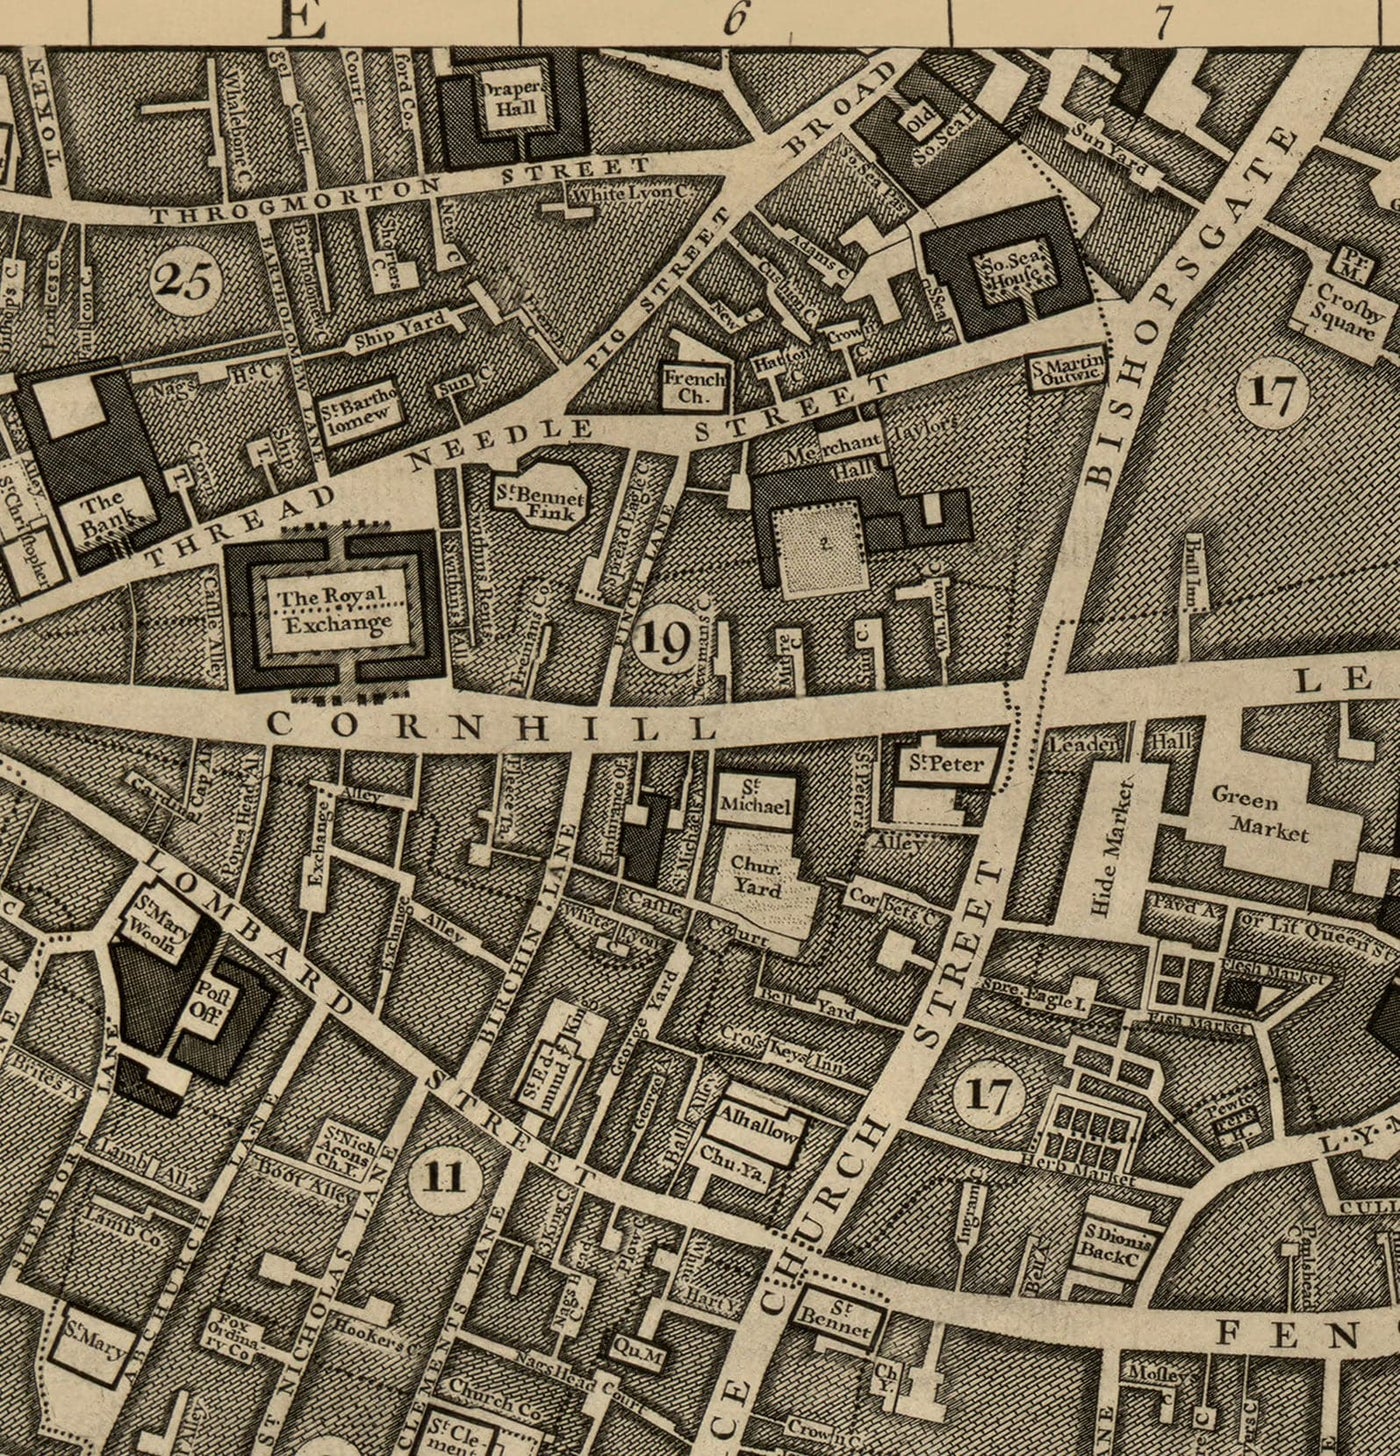 Viejo mapa de Londres, 1746 por John Rocque, E2 - Puente de Londres, Ciudad de Londres, Borough, Bermondsey, Monumento, Cannon, Banco, Barato